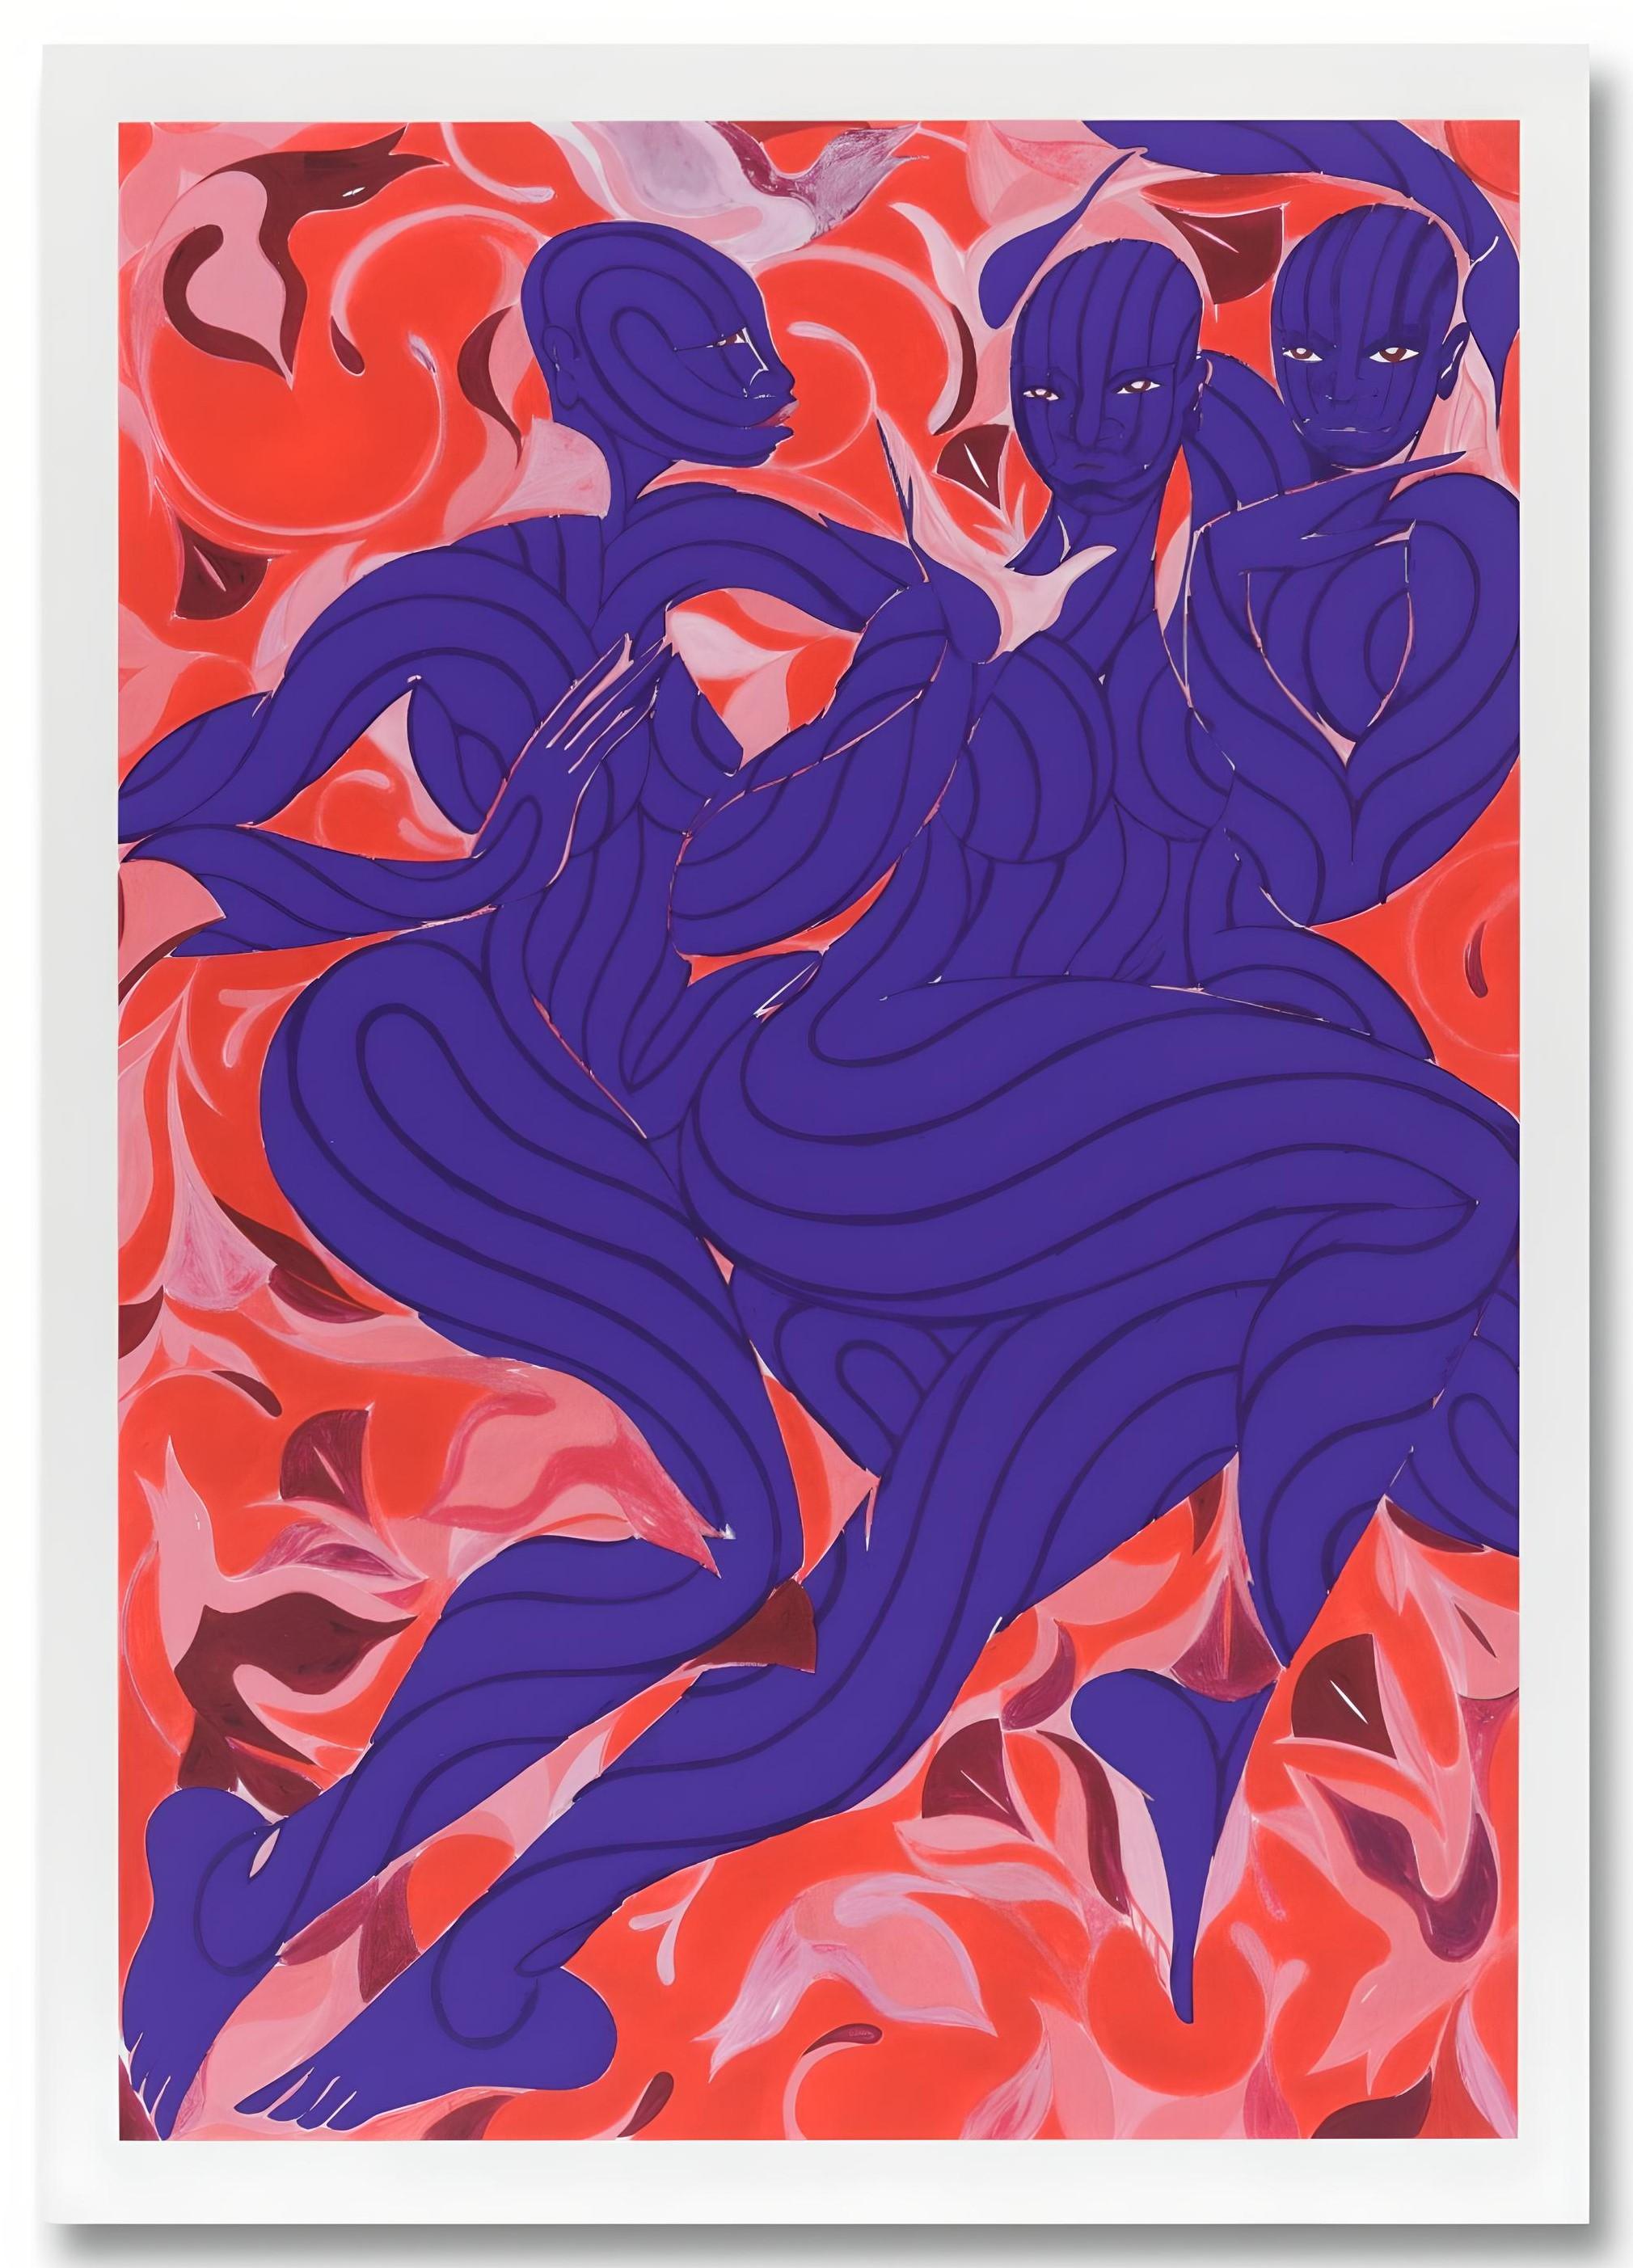 Tunji Adeniyi-Jones  Abstract Print - Violet Dance